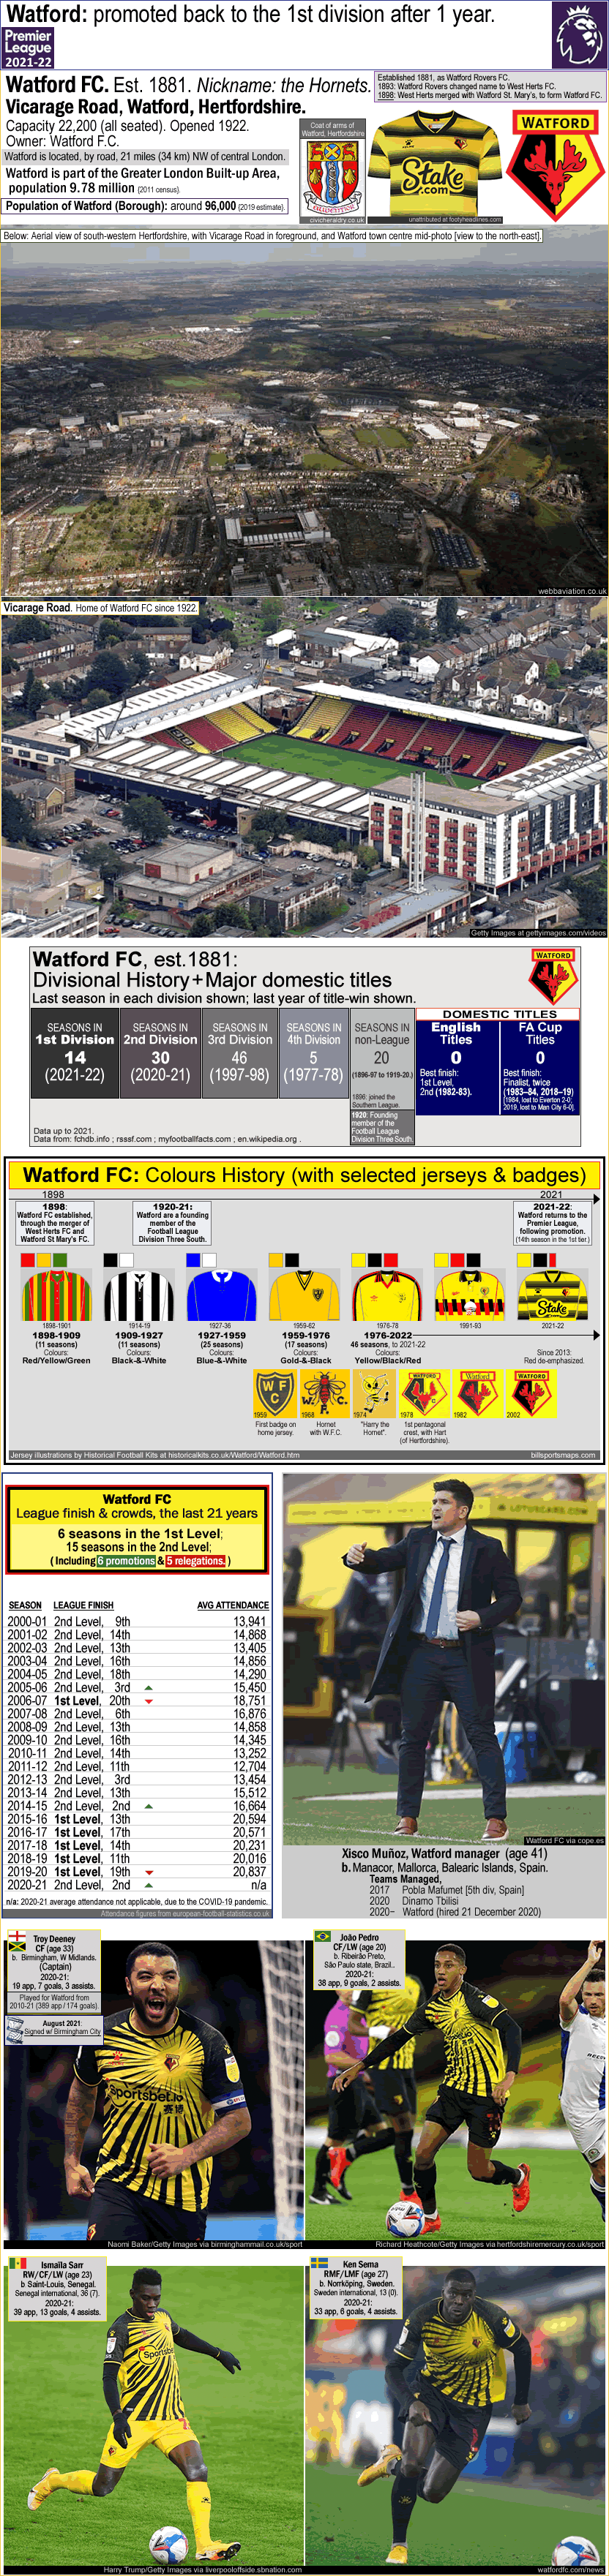 watford_promoted-2021_vicarage-road_club-colours-history_xisco-munoz_t-deeney_j-pedro_i-saar_k-sema_k_.gif